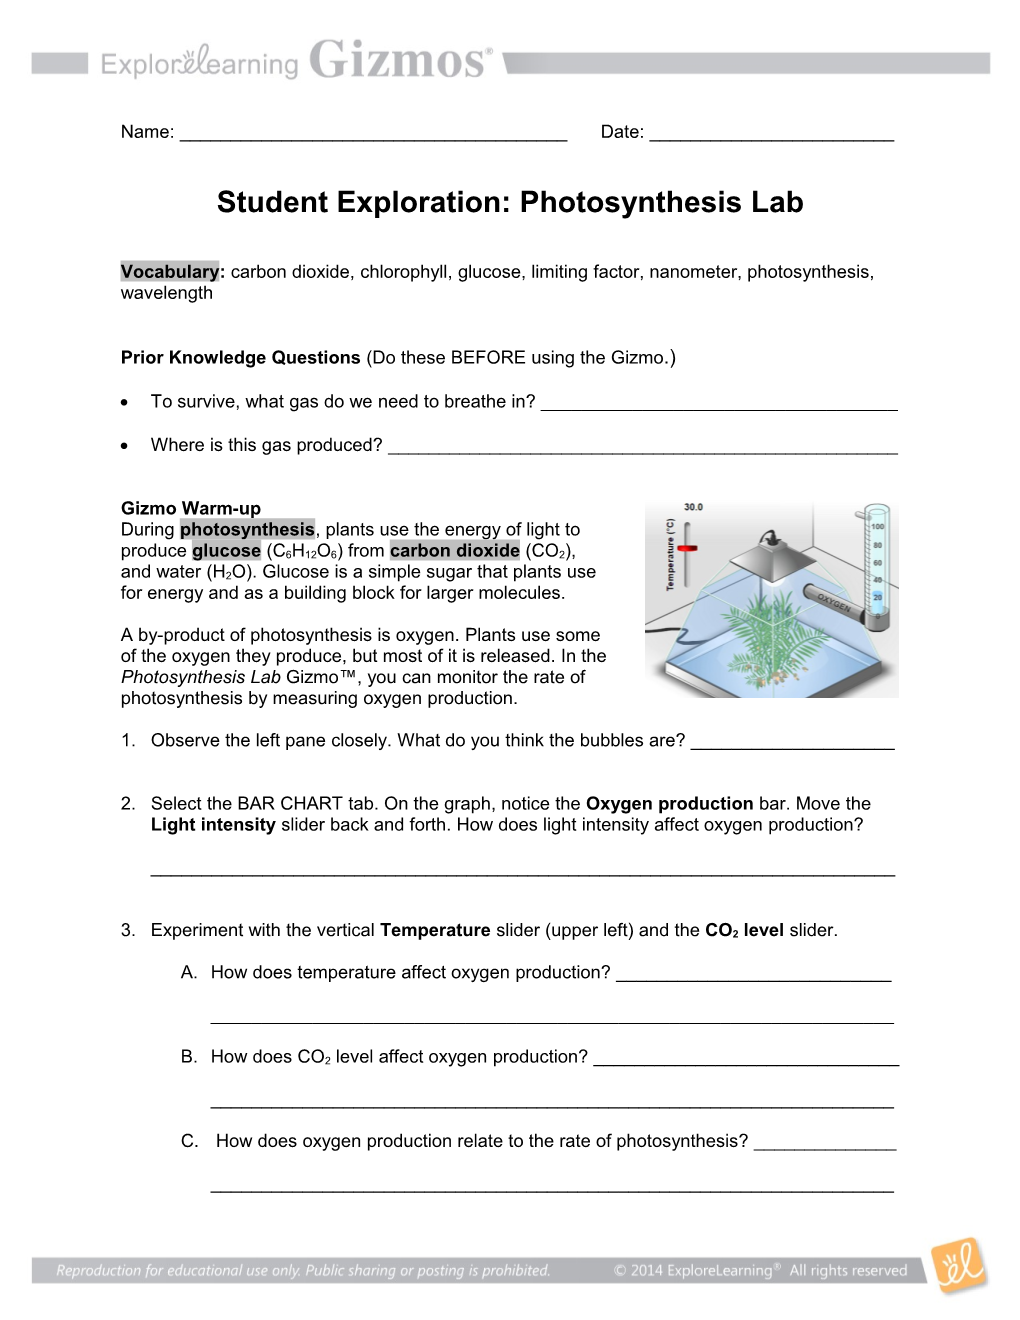 Student Exploration: Photosynthesis Lab